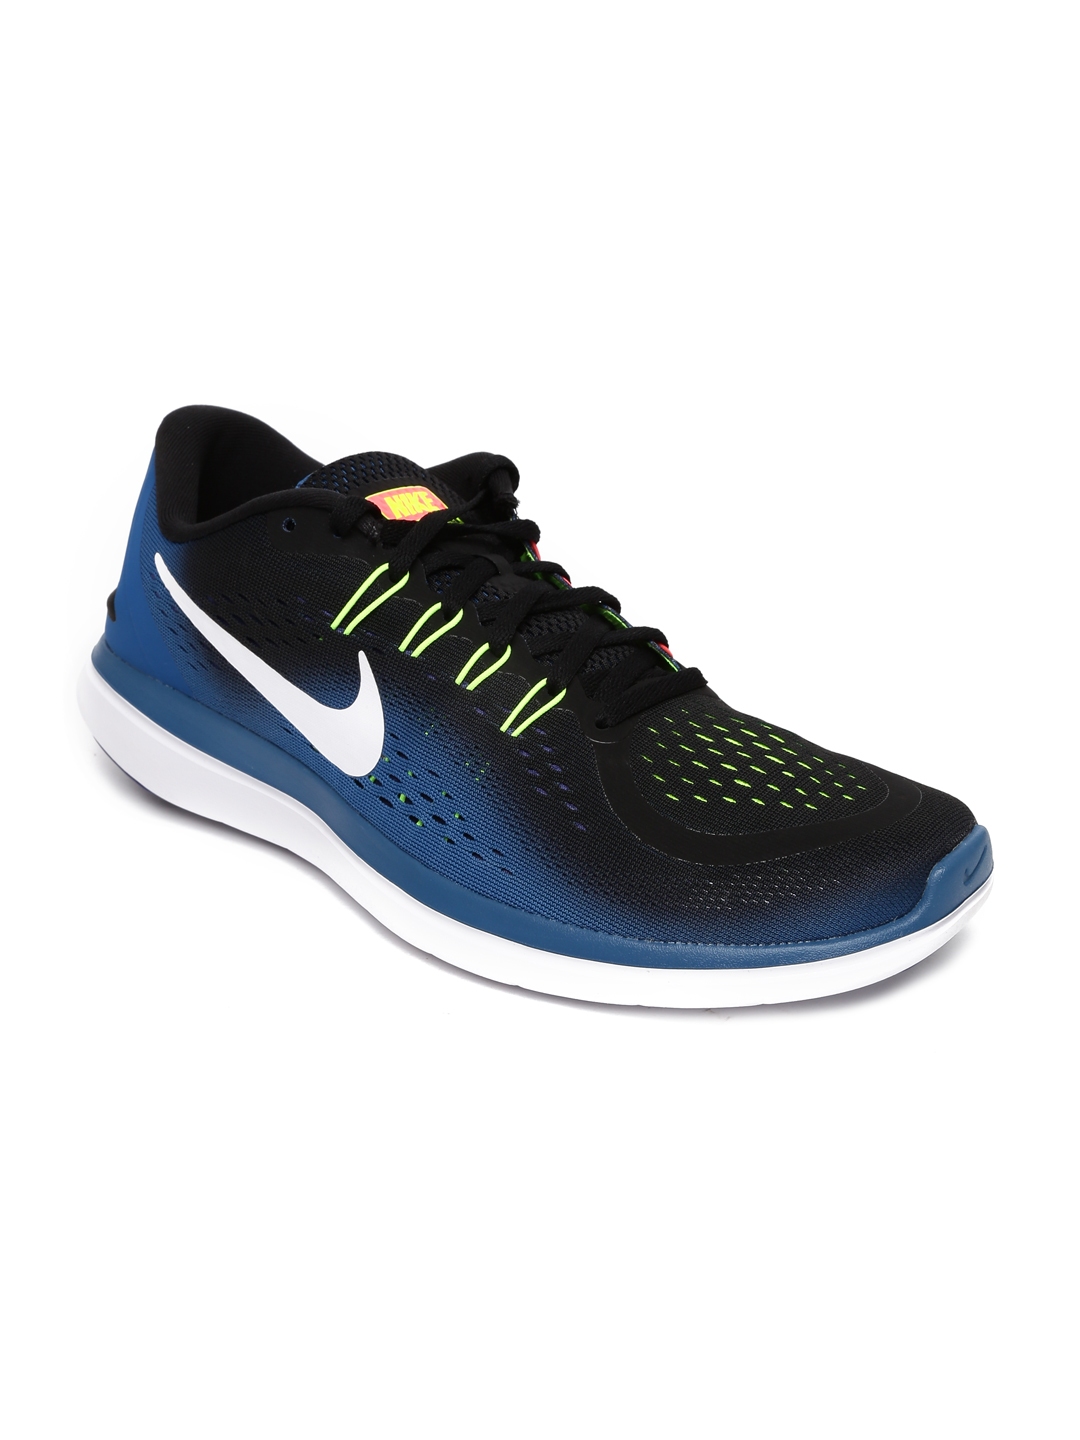 Buy Nike Men Blue & Black Flex 2017 Running Shoes - Sports Shoes for ...